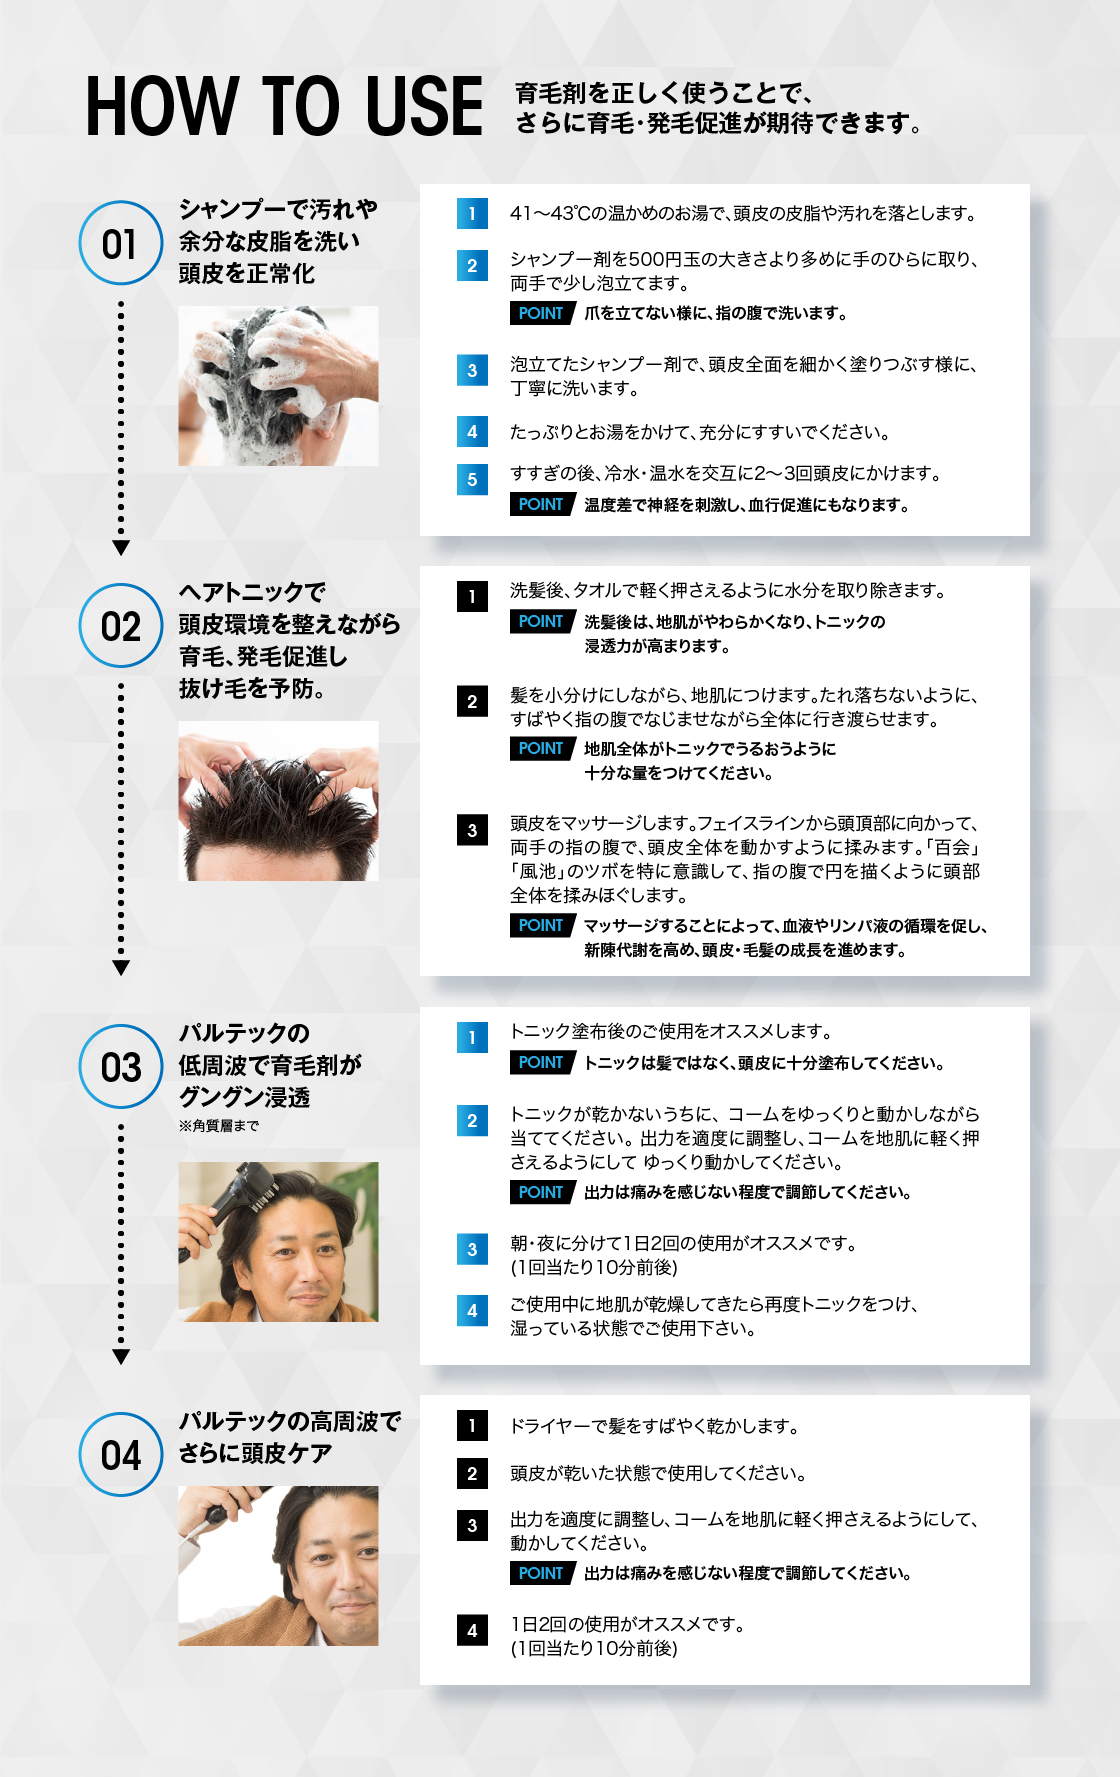 HOW TO USE 育毛剤を正しく使うことで、さらに育毛・発毛促進が期待できます。